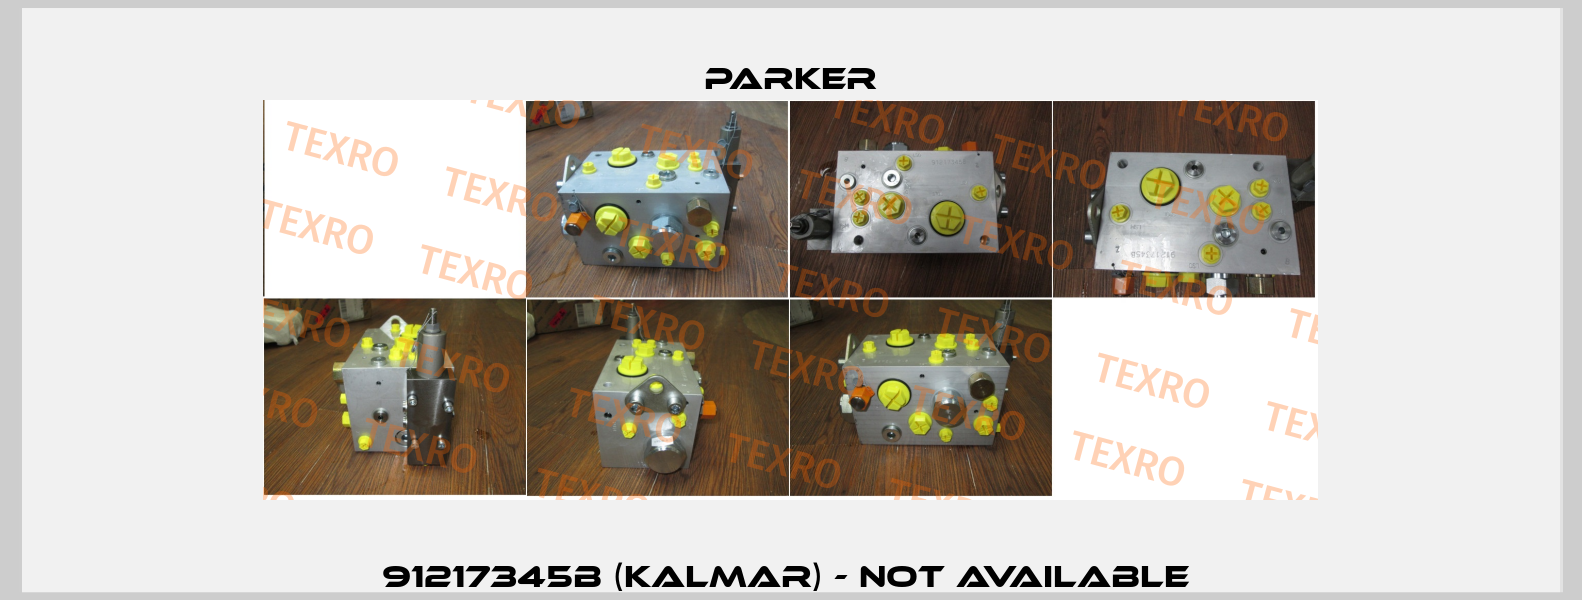 91217345B (Kalmar) - not available  Parker